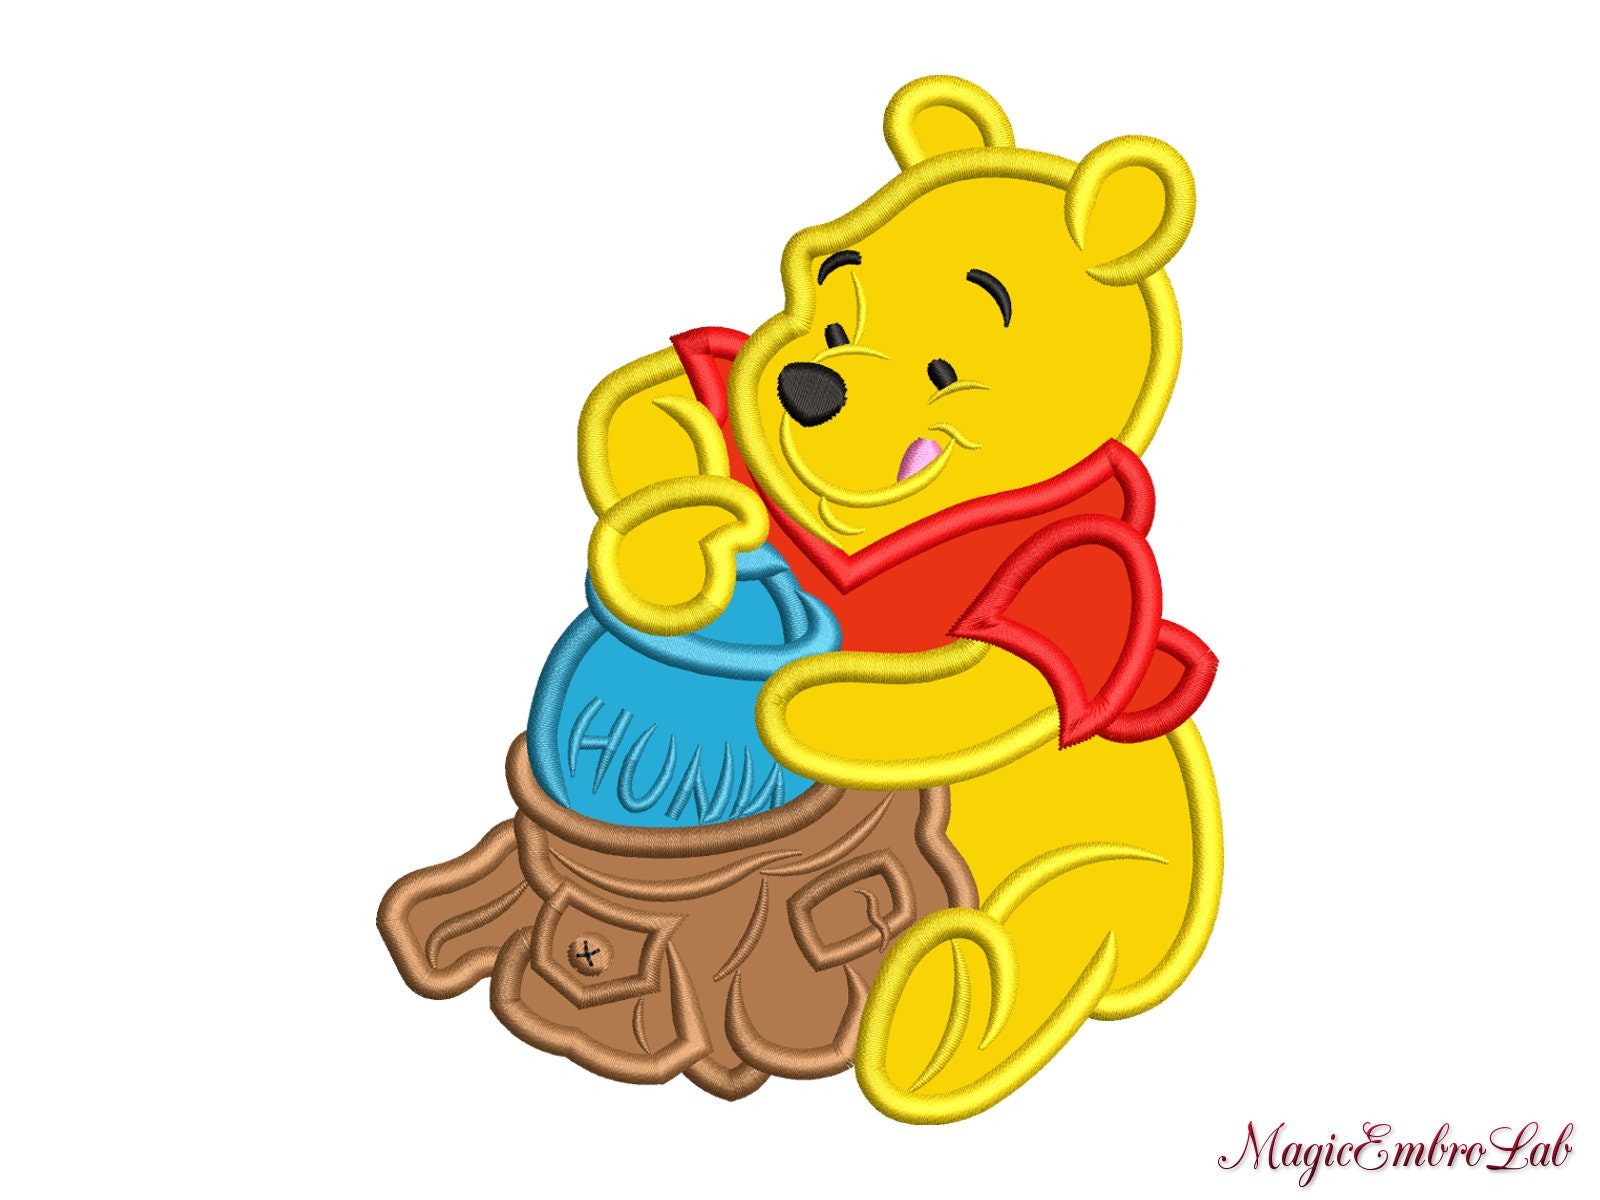 Walt Disney World Iron On Patch Winnie The Pooh And Friends 6x9”